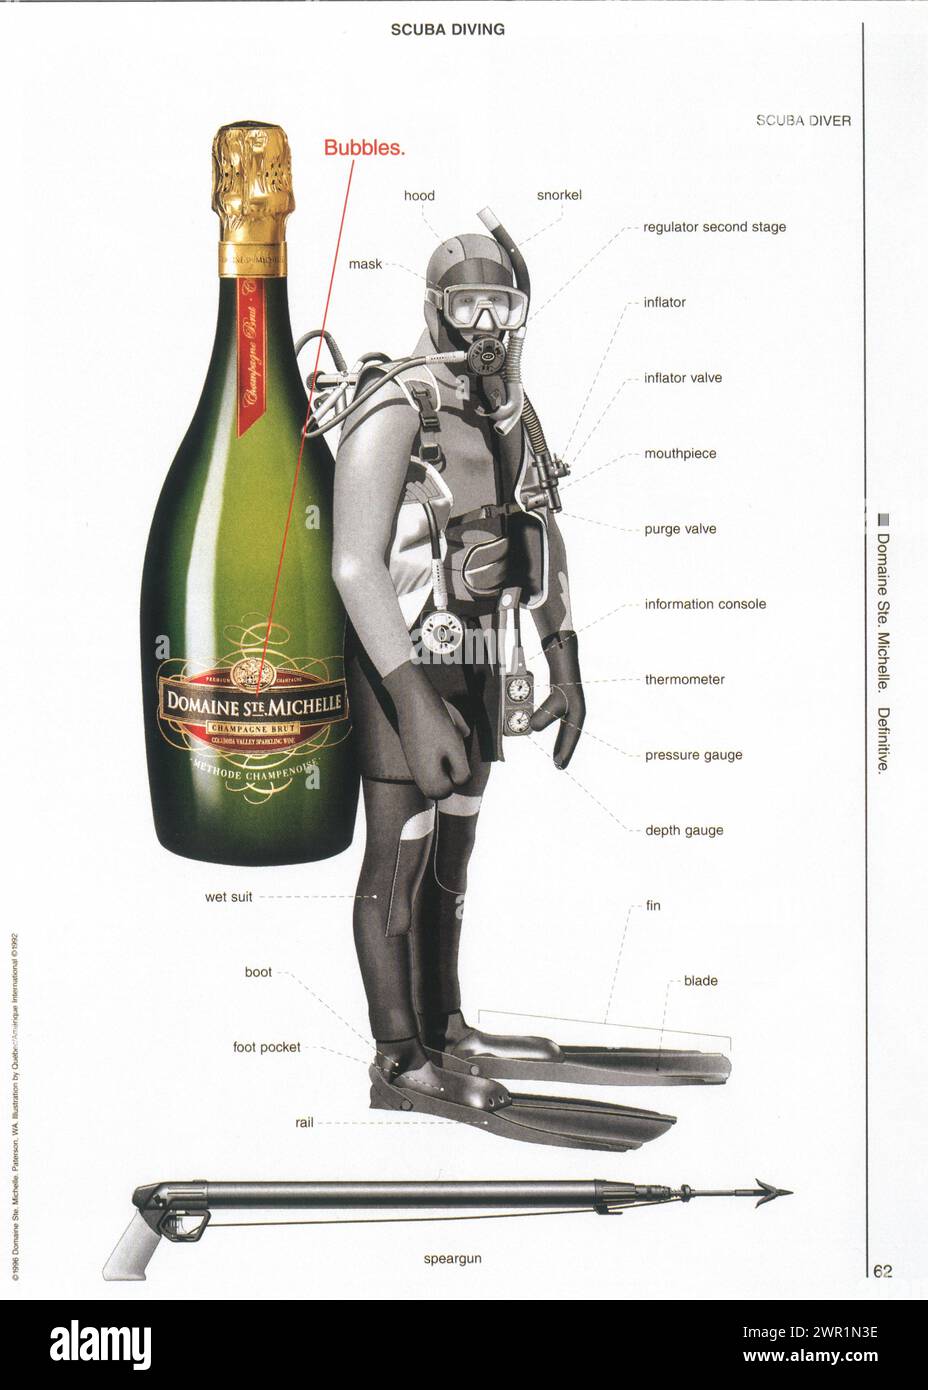 1996 Domaine Ste. Michelle Sparkling Wine Print Ad with scuba diver Stock Photo